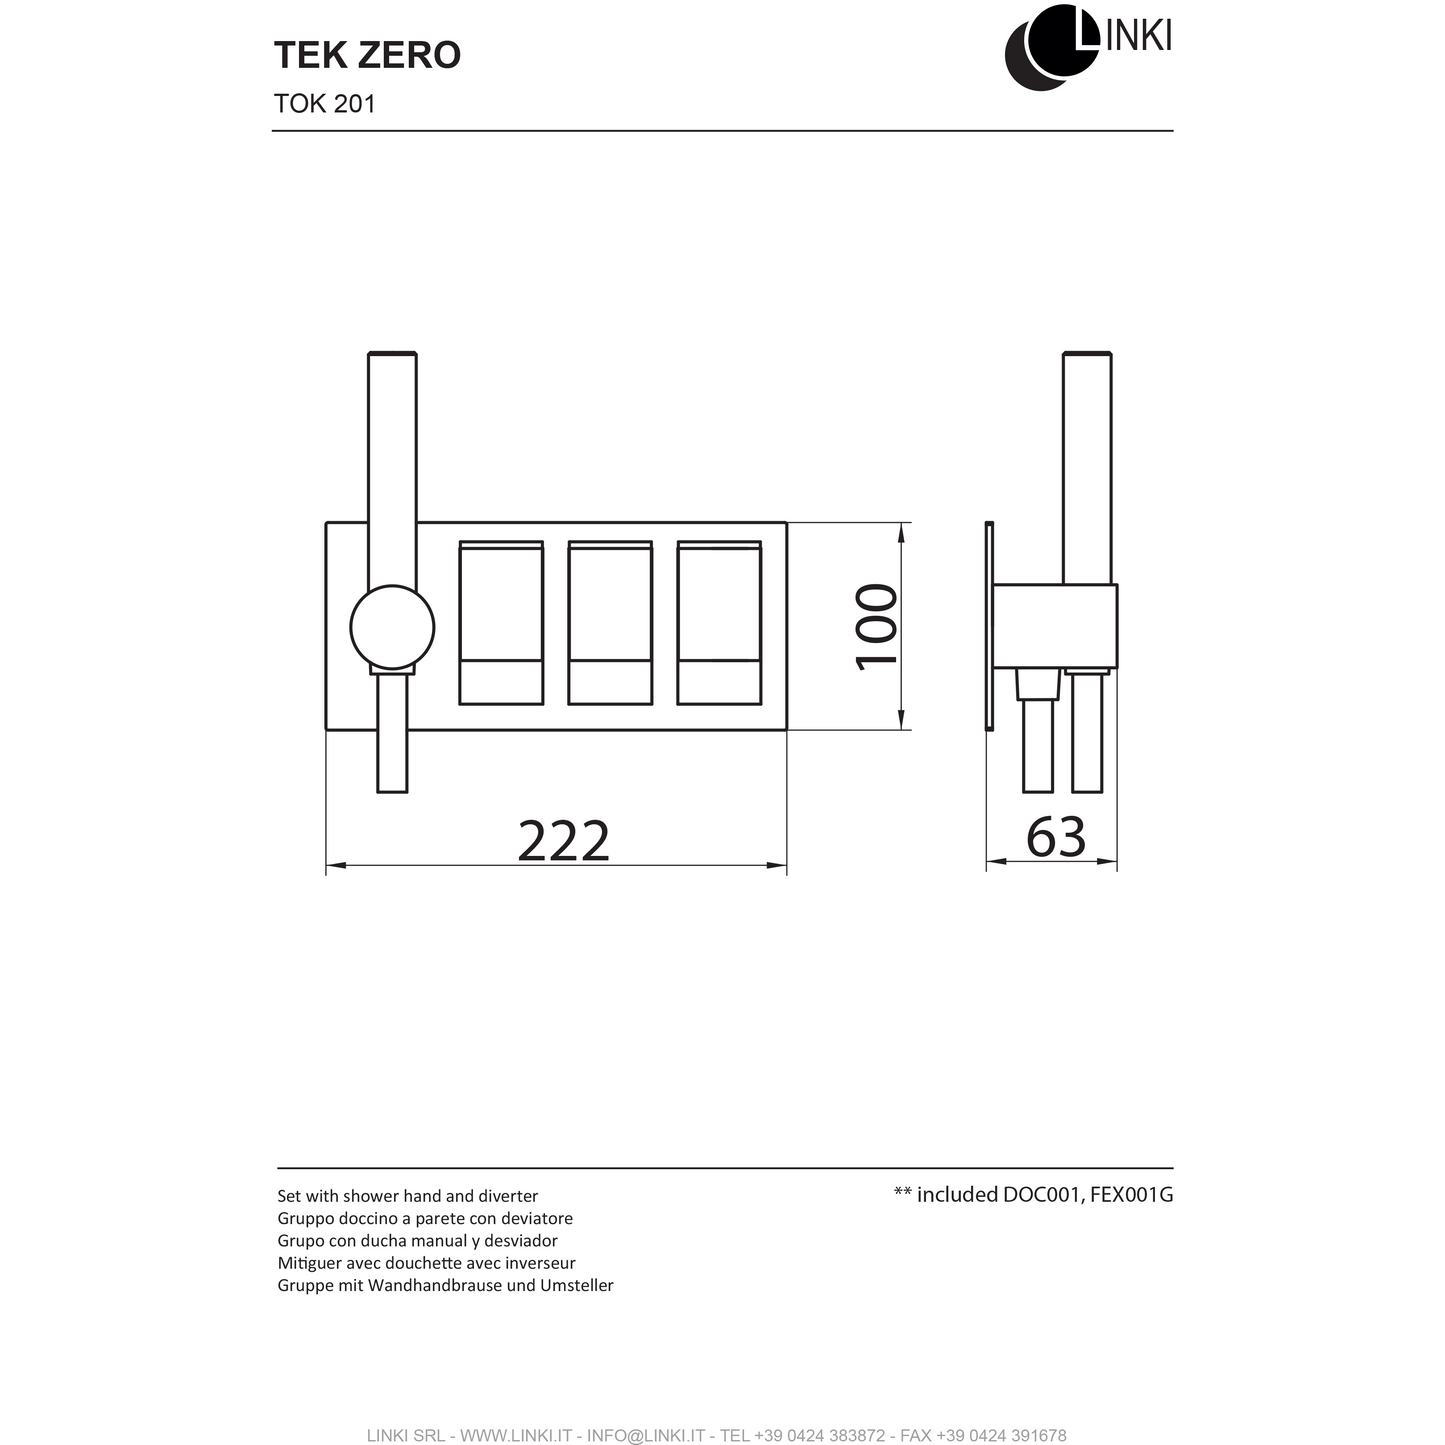 Bath and shower mixer wall mount TEK ZERO stainless steel TOK201